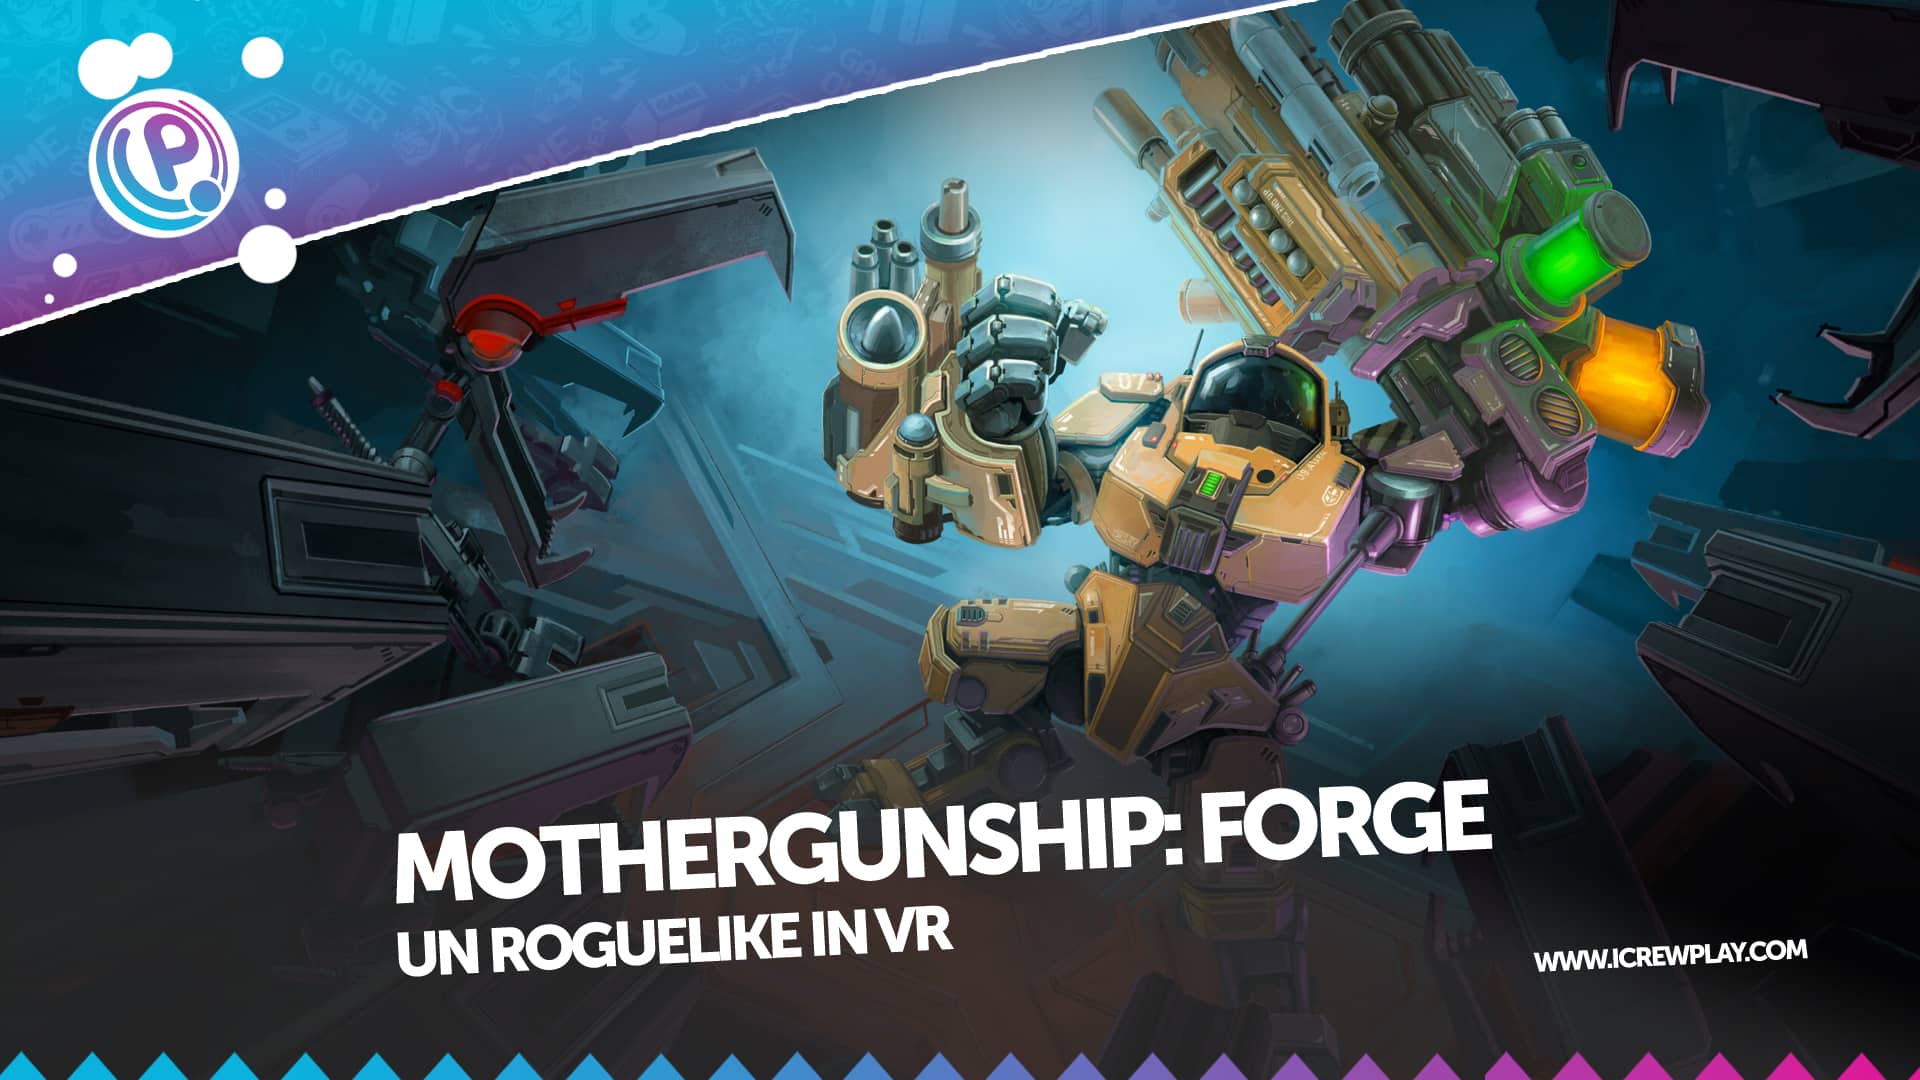 Mothergunship: Forge